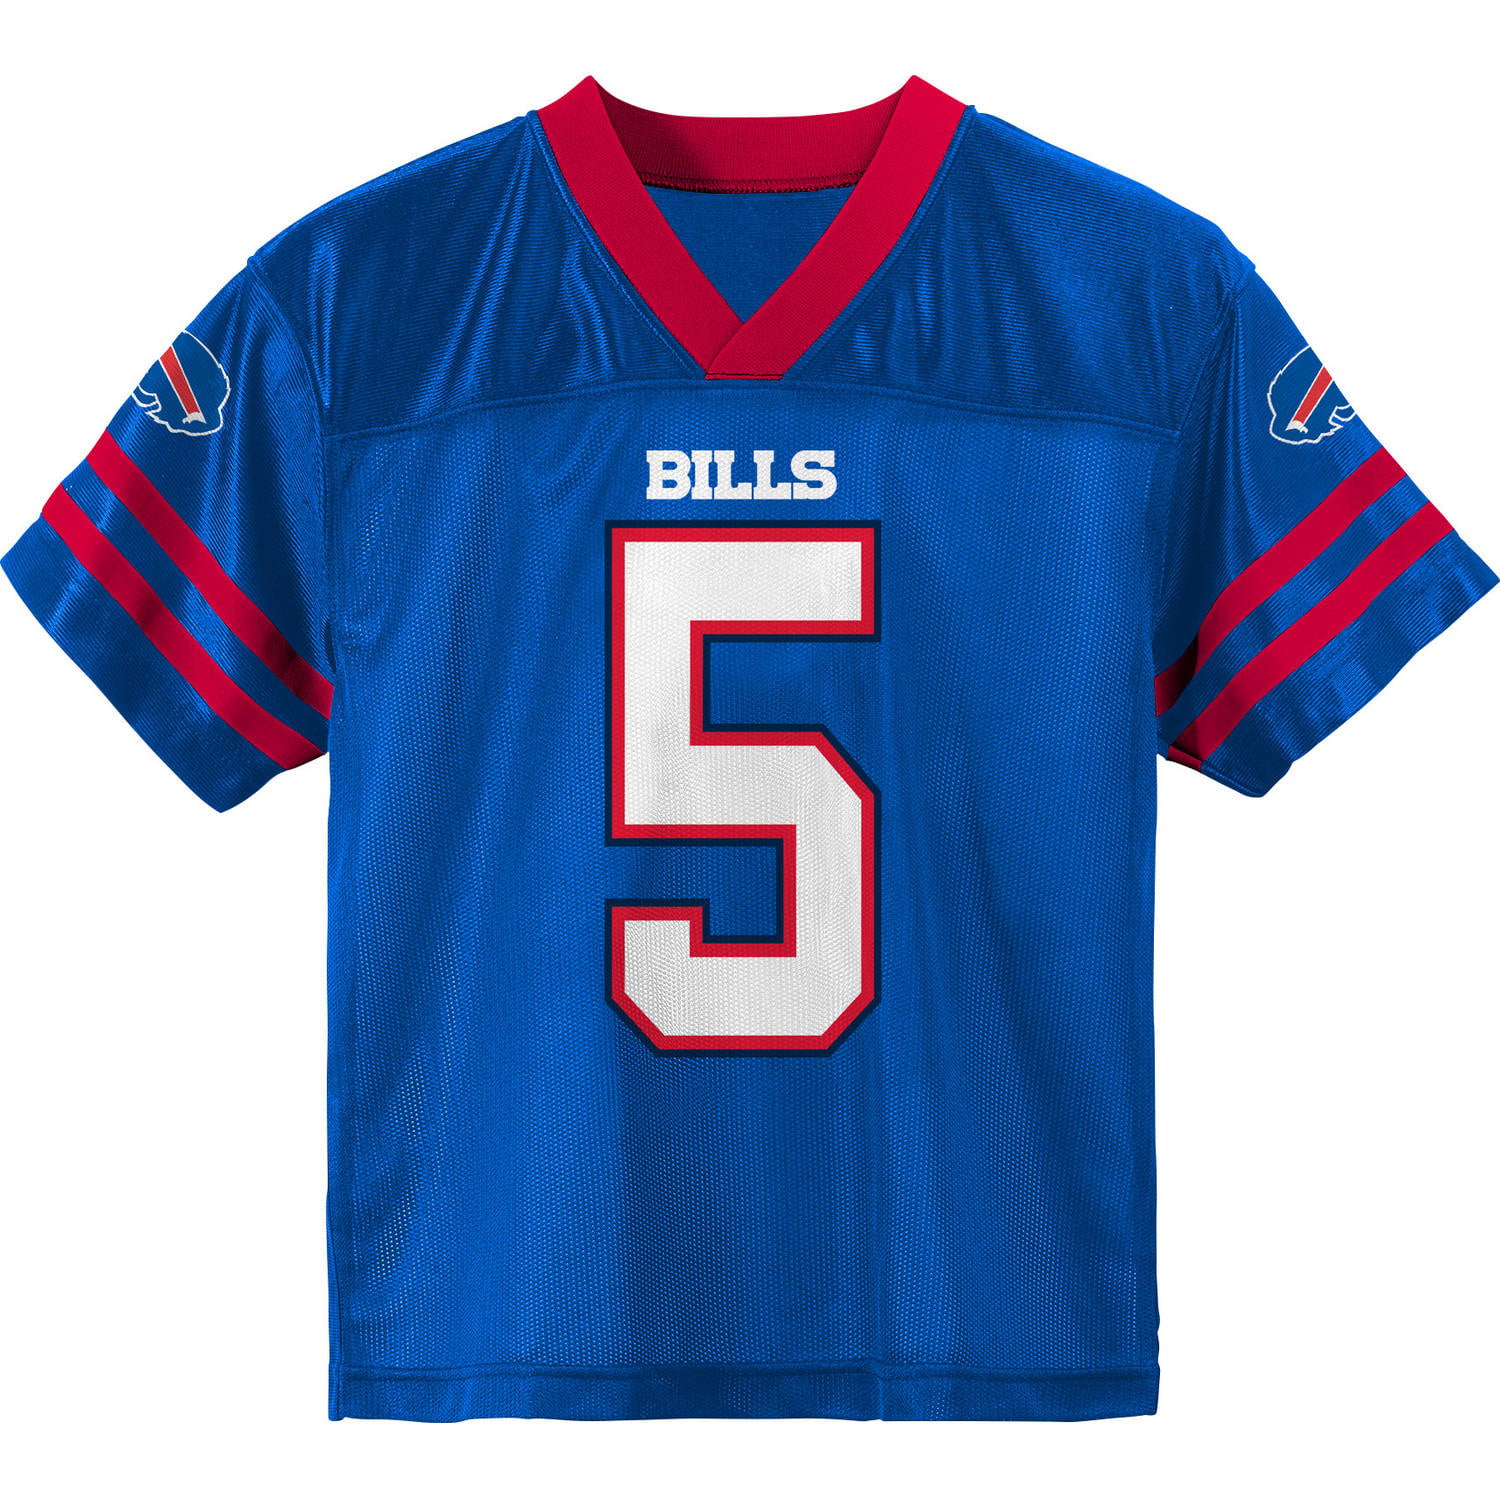 bills youth jerseys